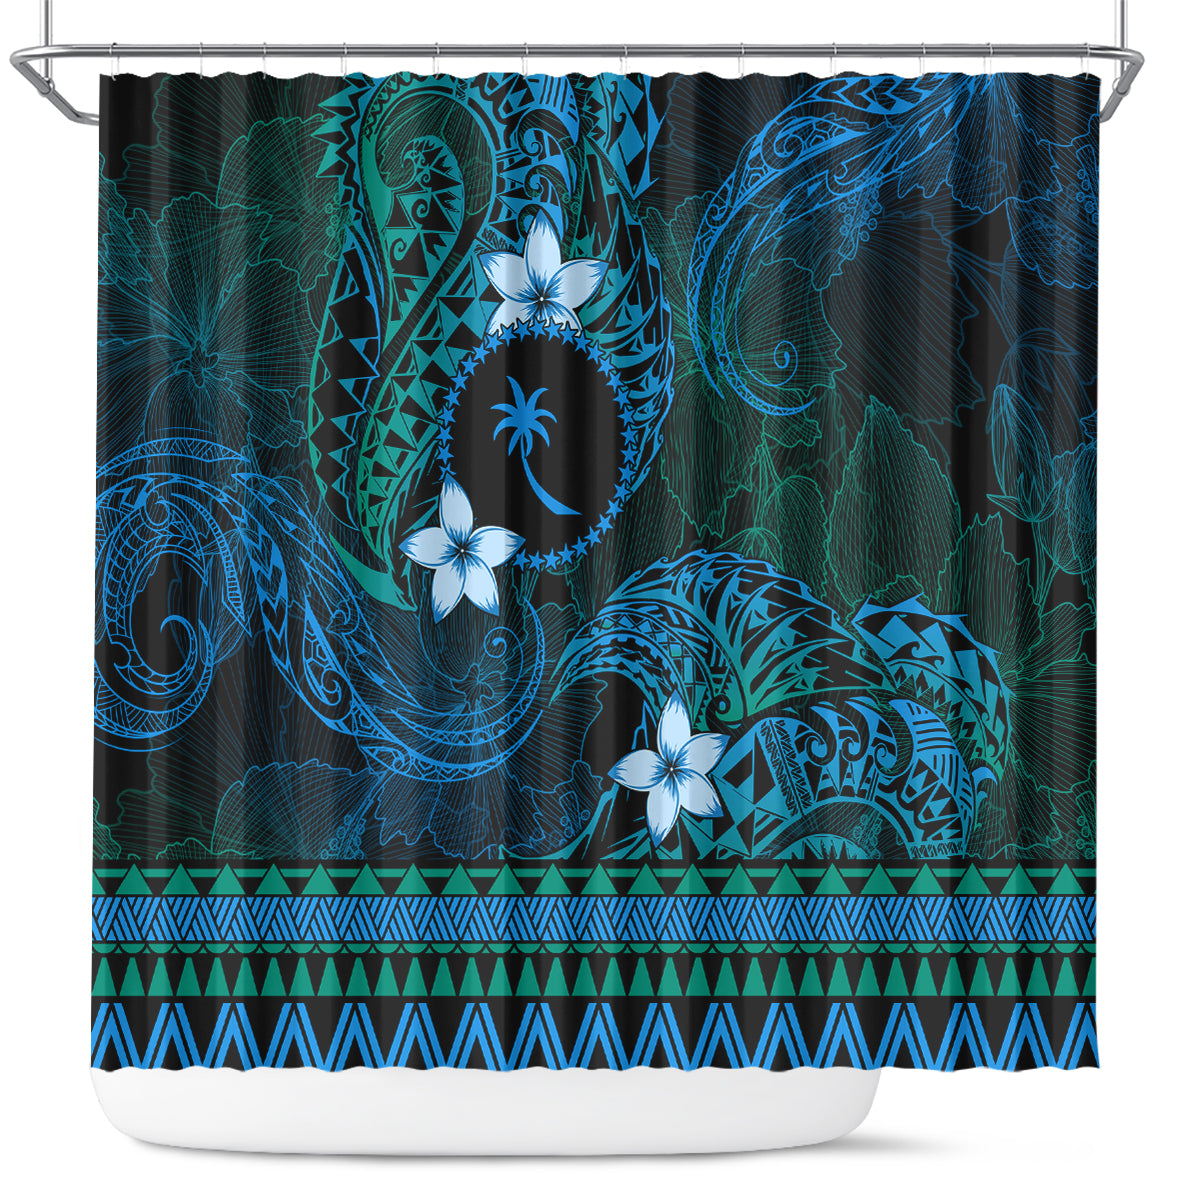 FSM Chuuk State Shower Curtain Tribal Pattern Ocean Version